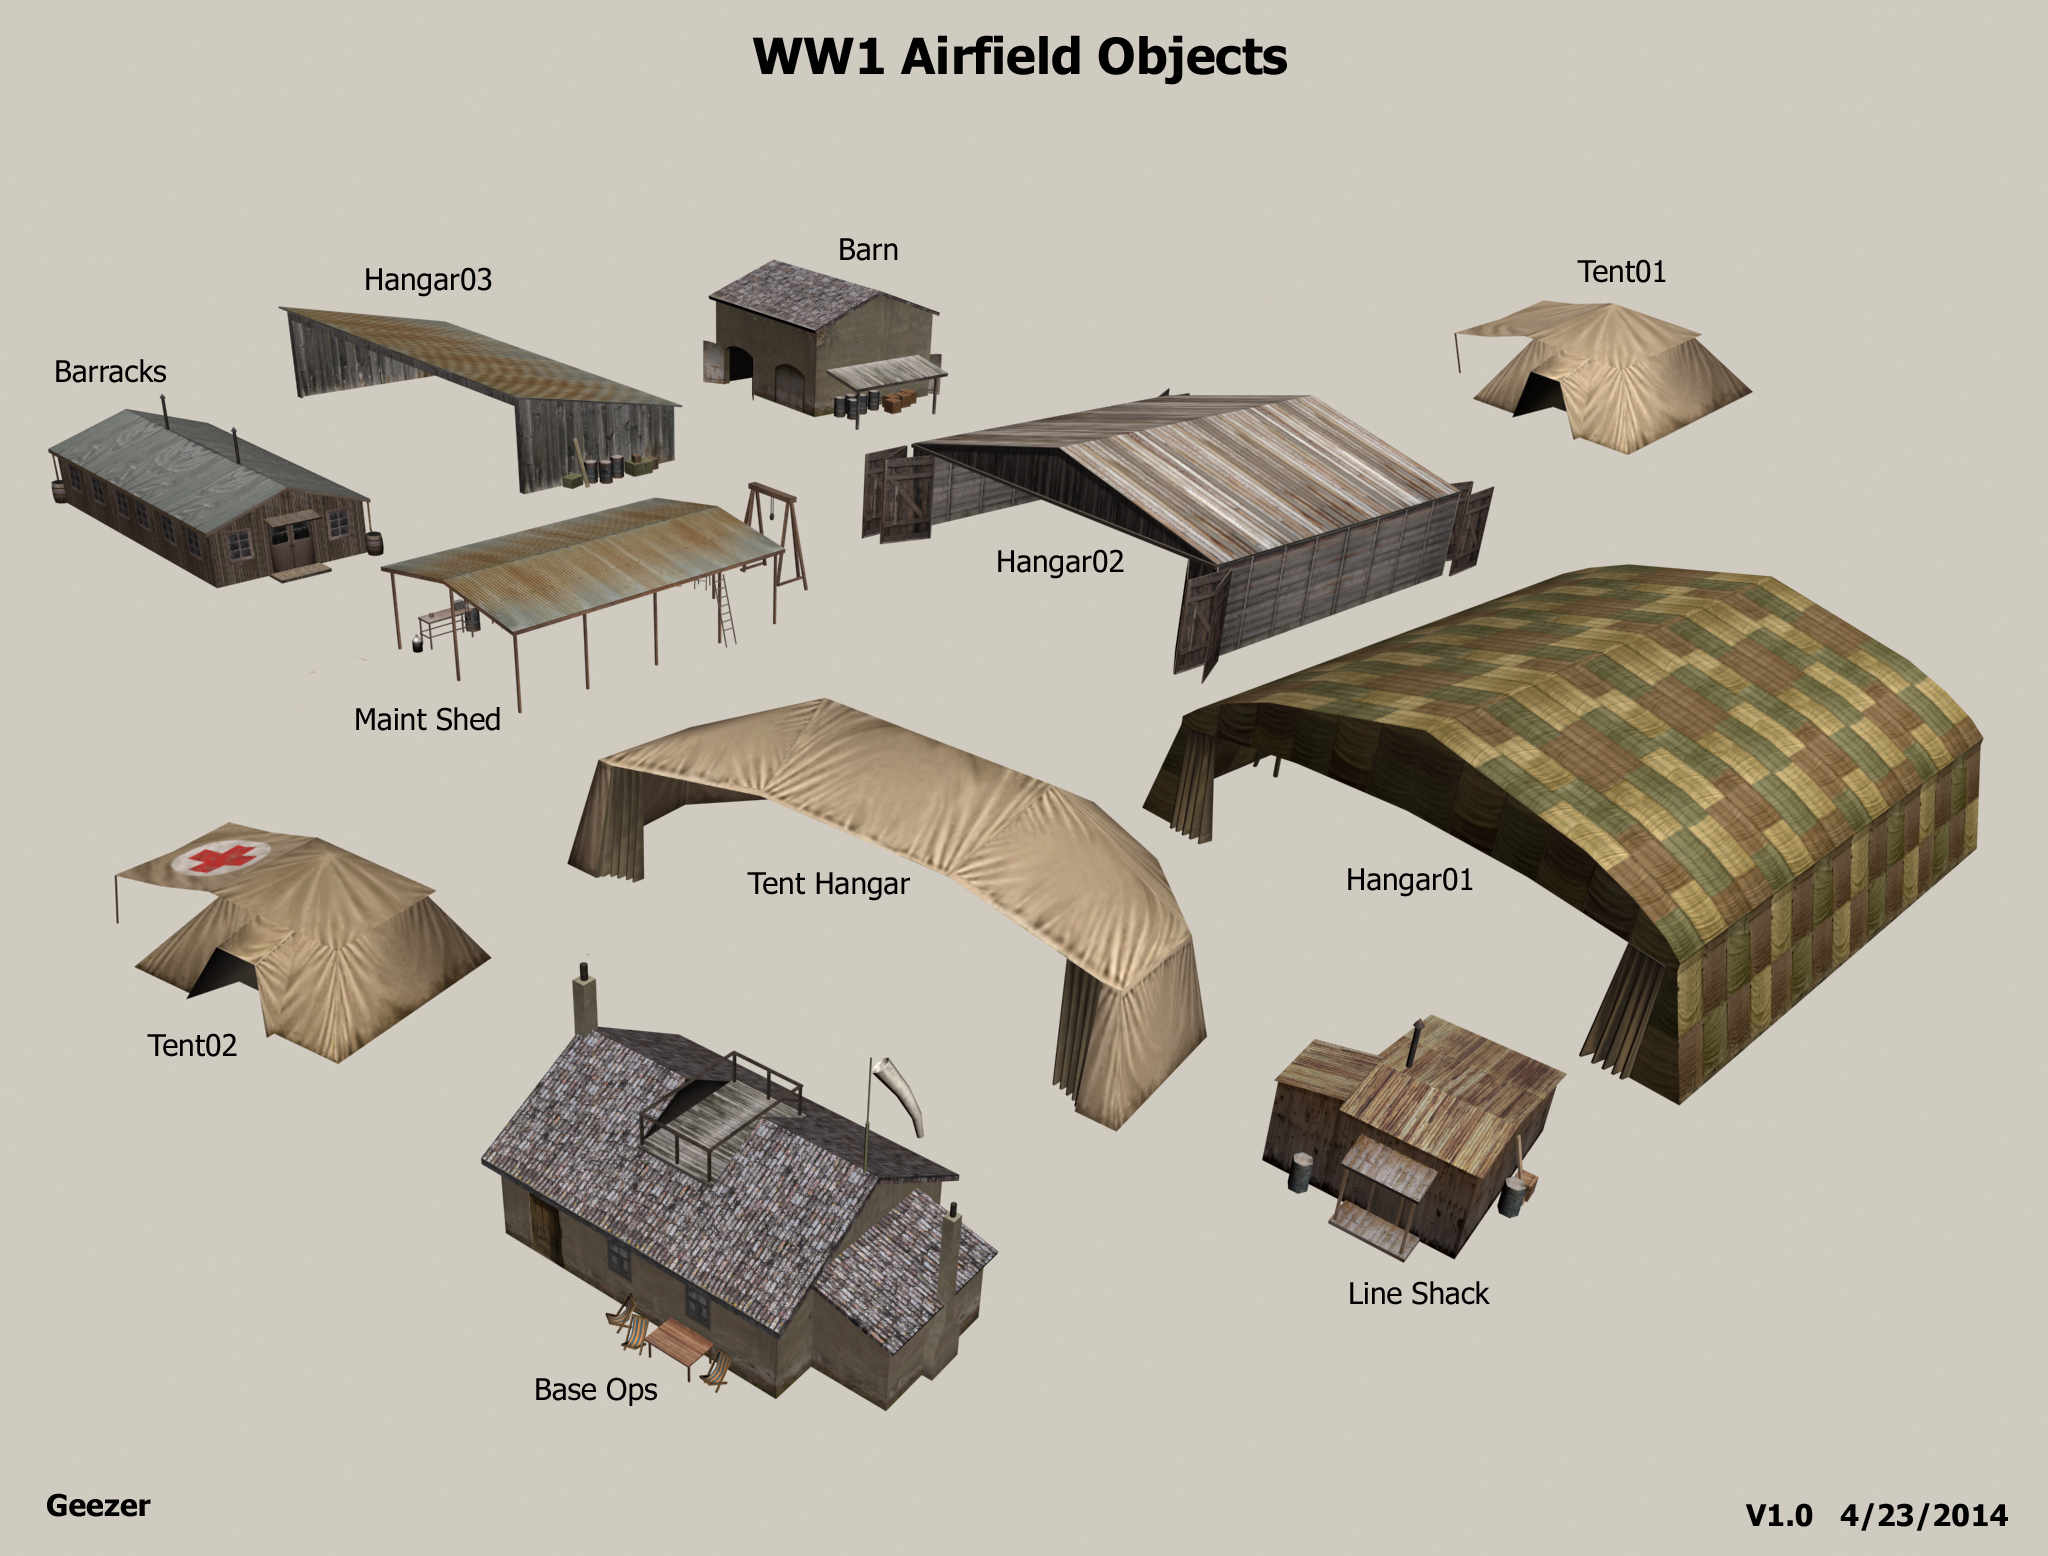 WW1 Airfield Objects